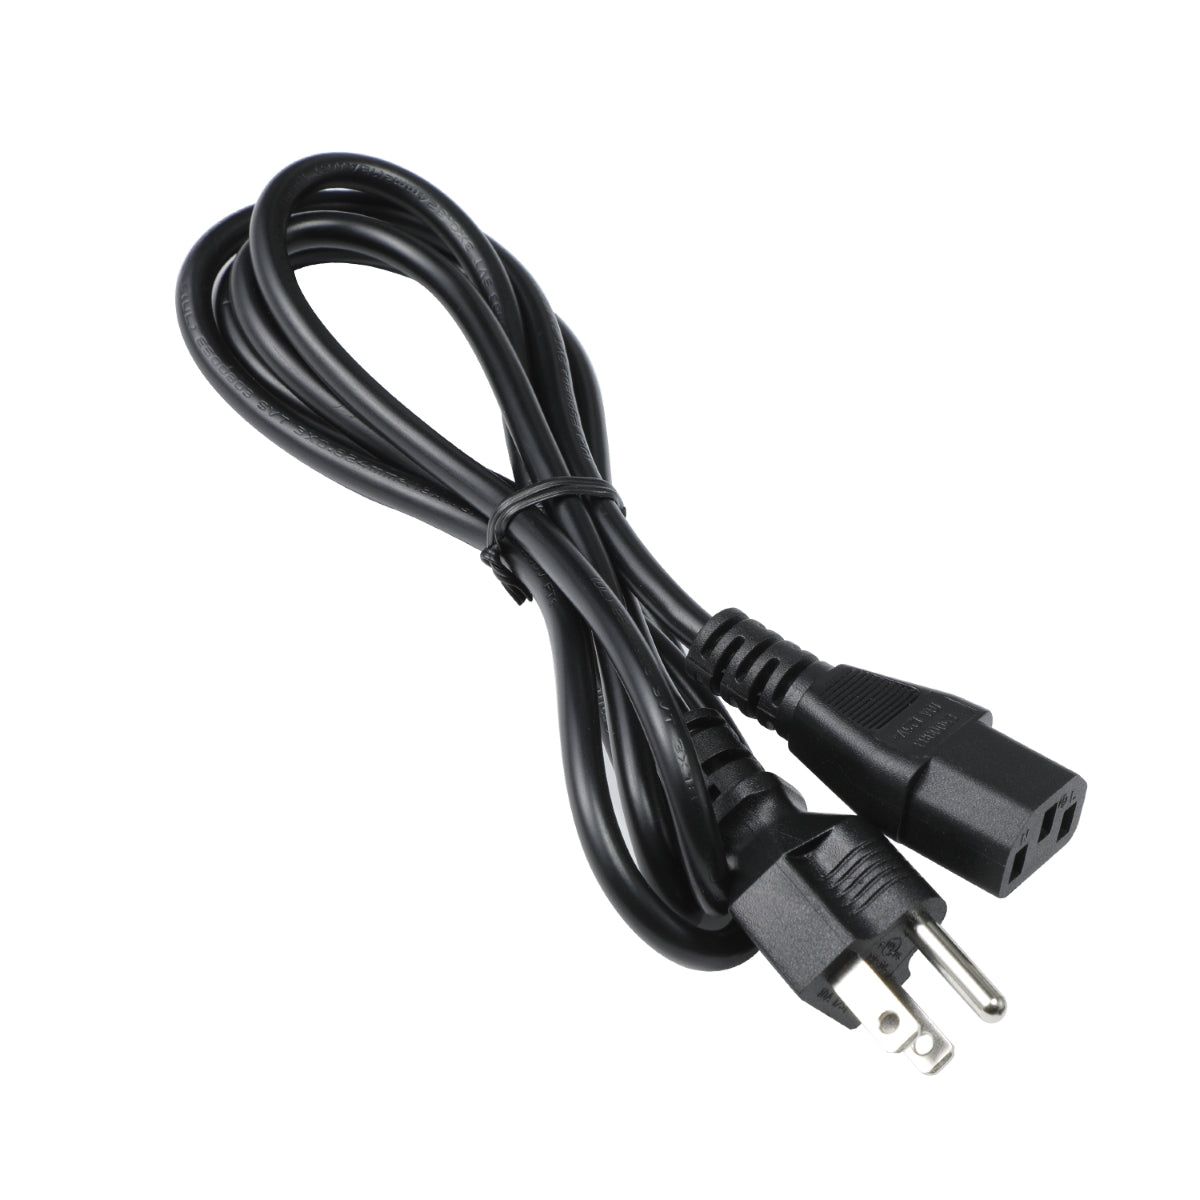 Power Cord for Dell U4021QW Monitor